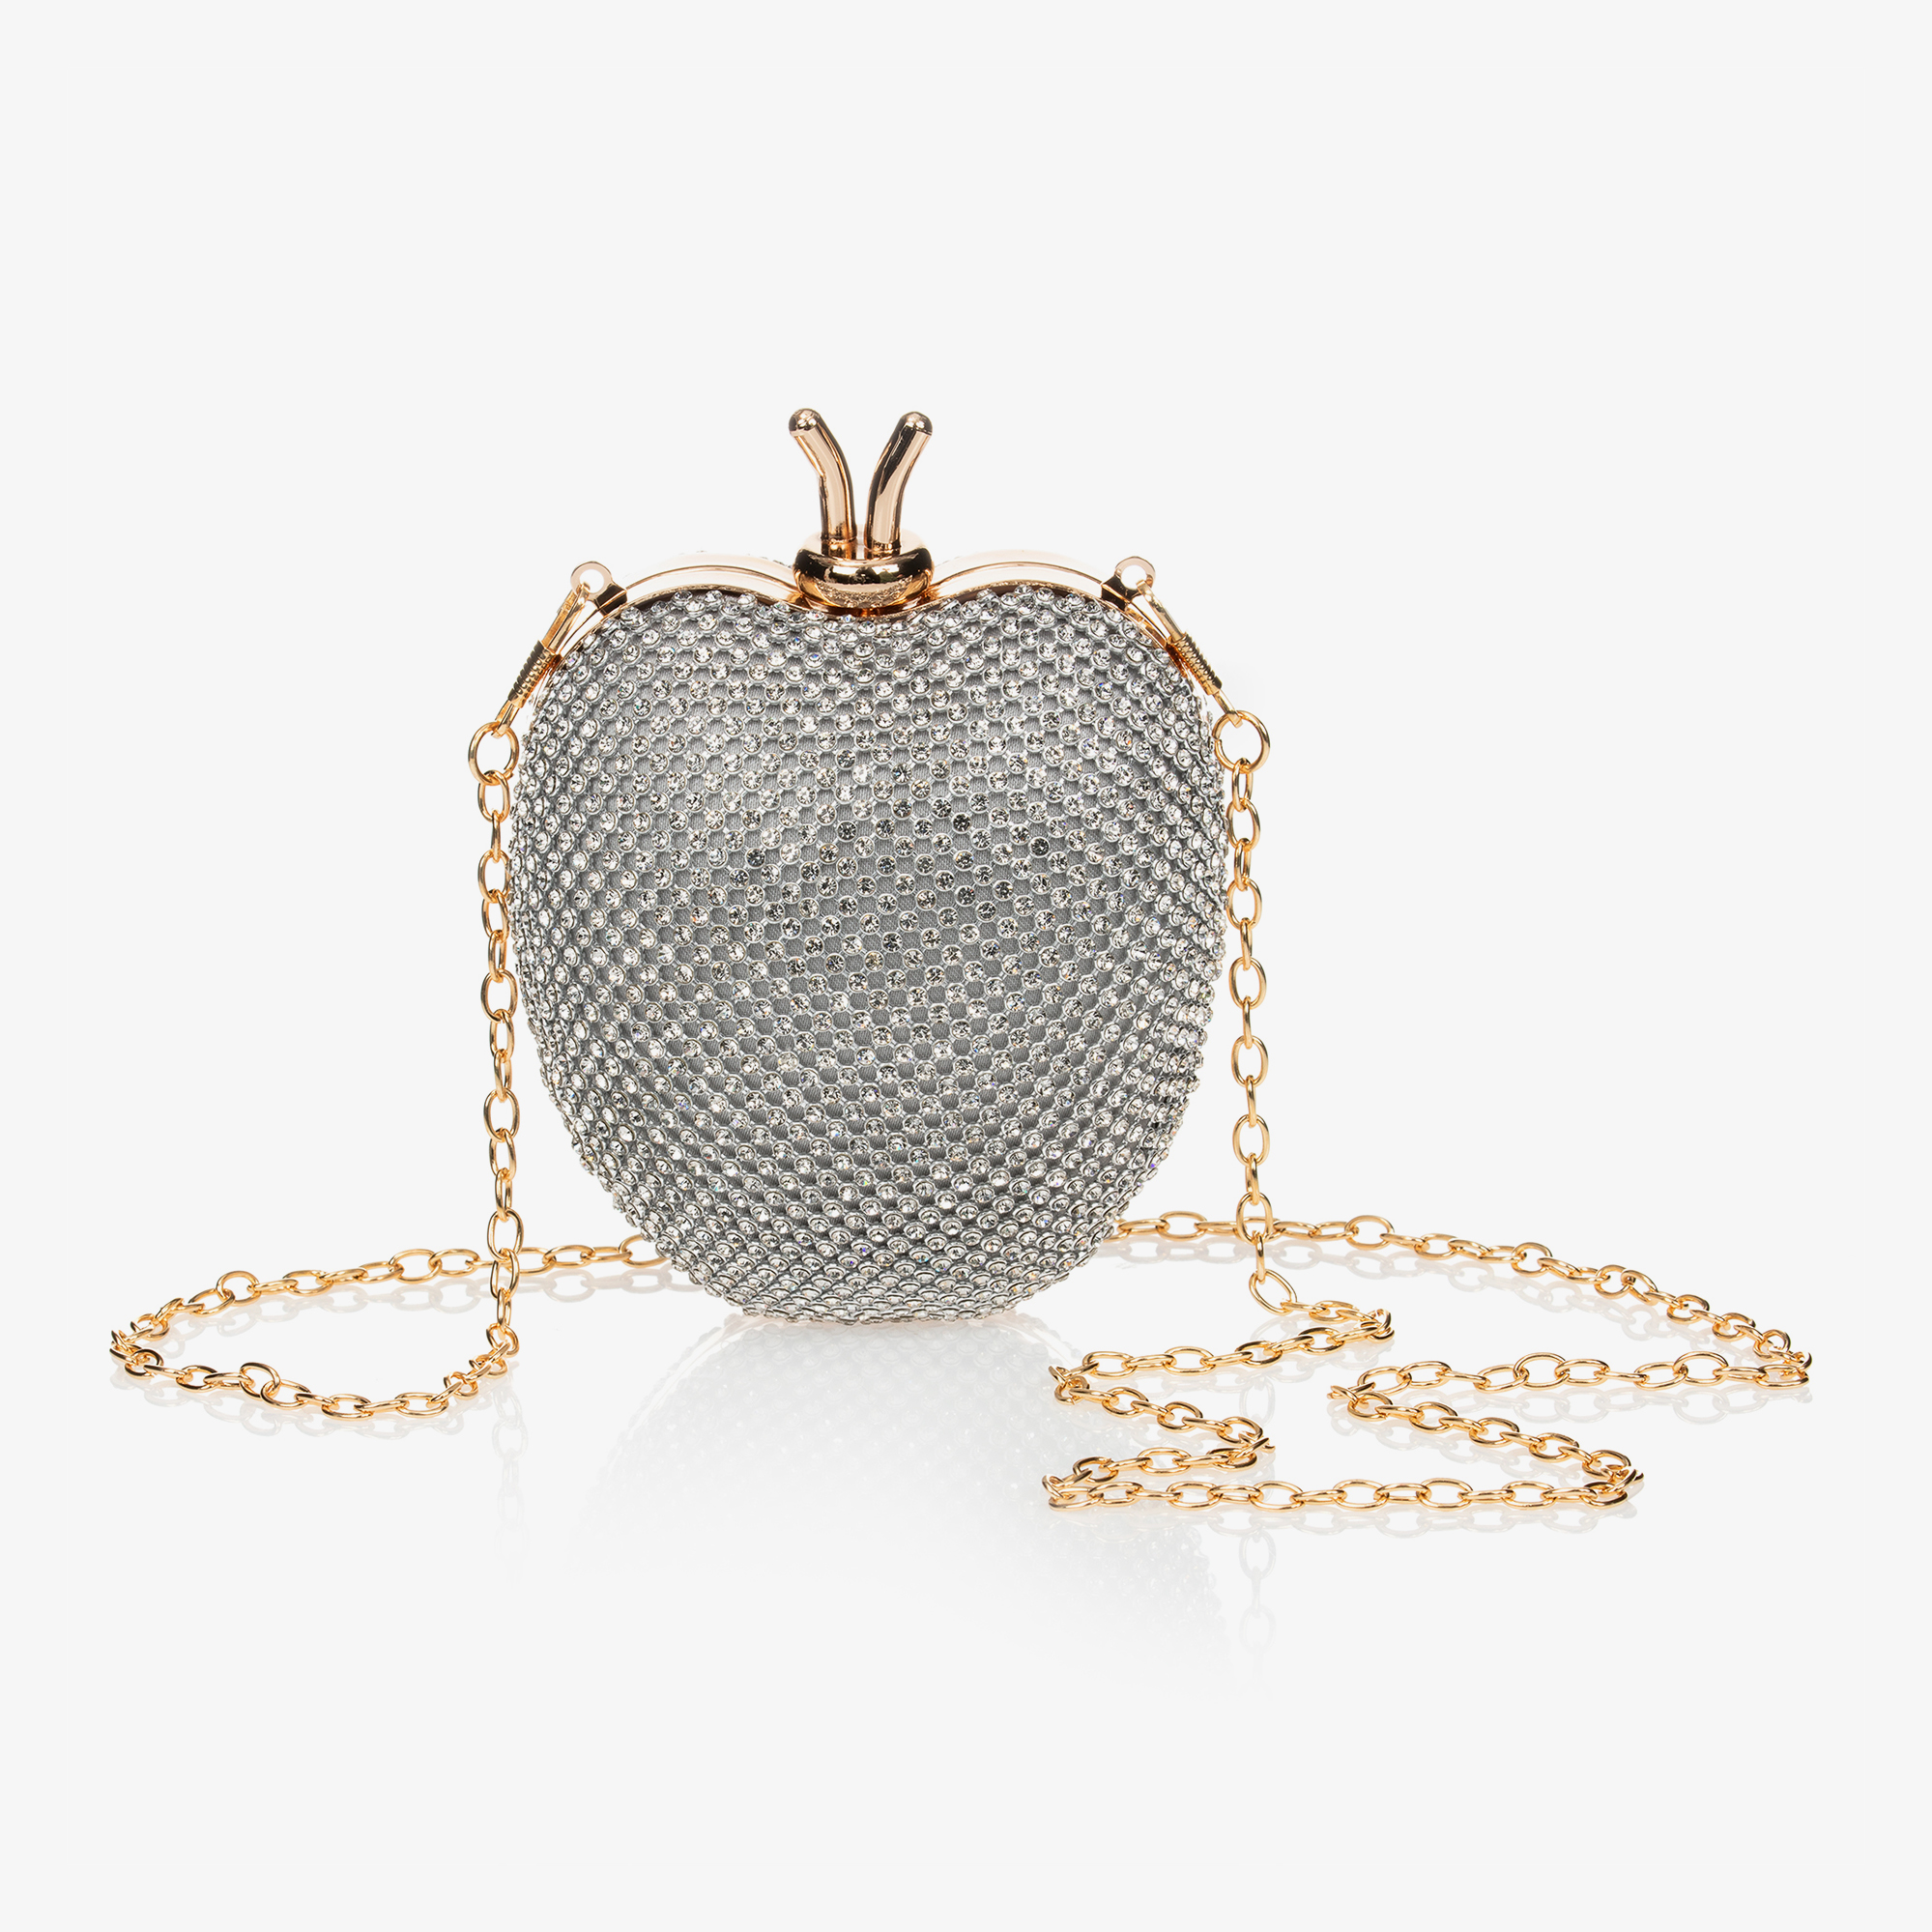 MagicLove Bling Evening Bag for Women Rhinestone Crystal Clutch Purse  Silver : Amazon.in: Fashion